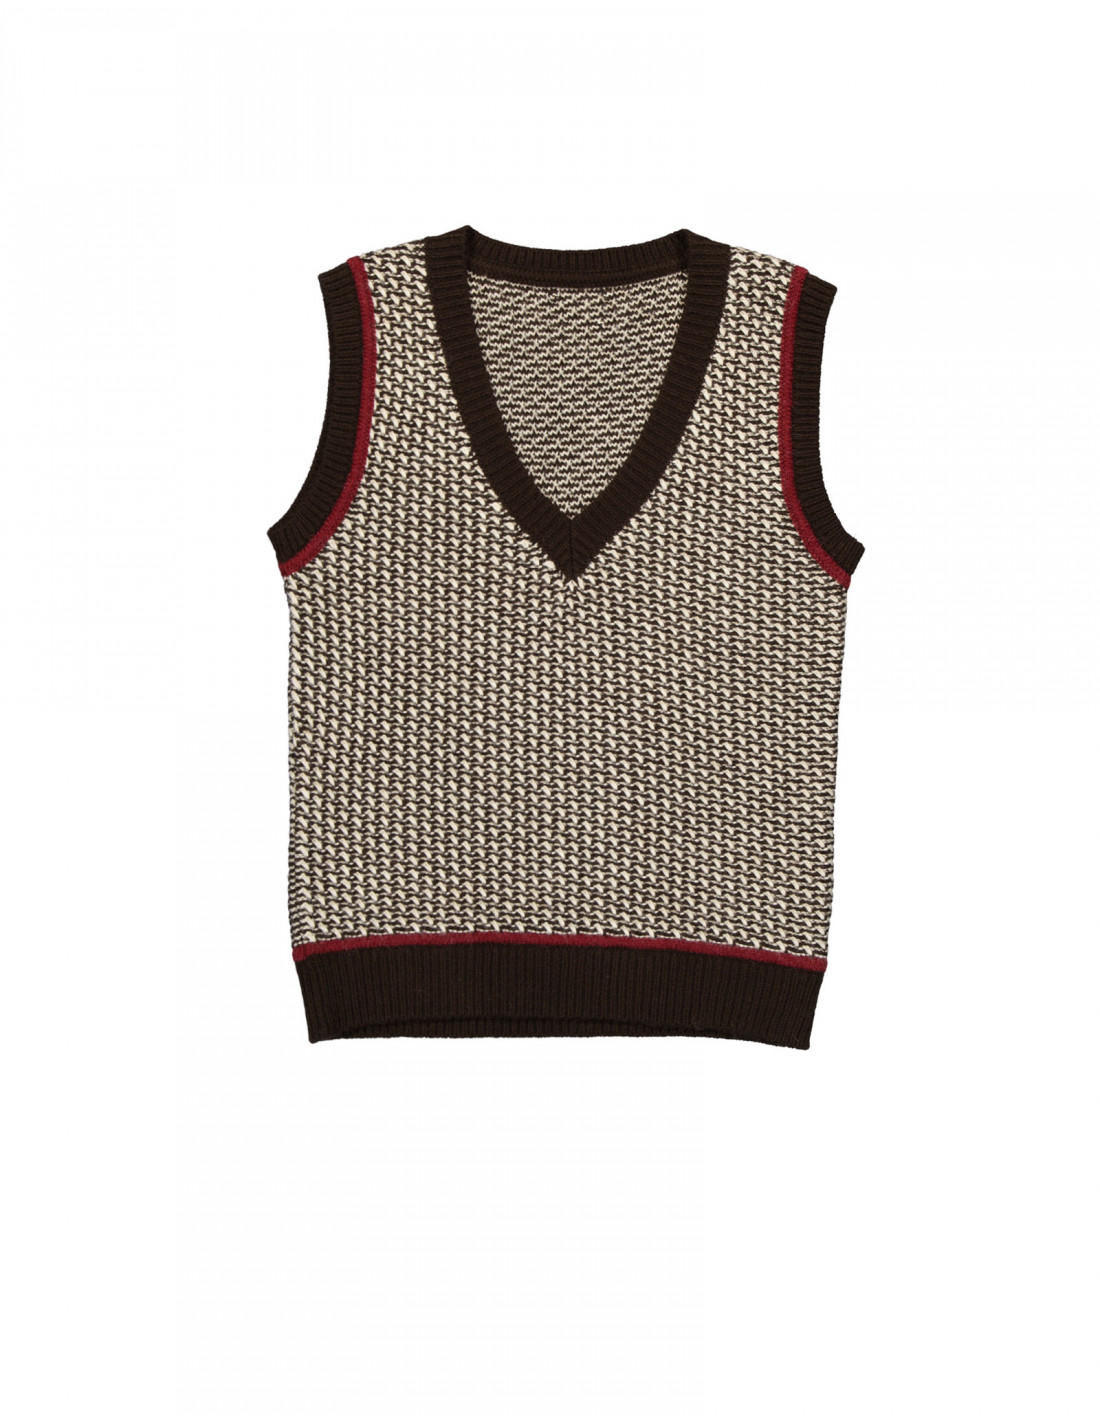 Vintage women's knitted vest